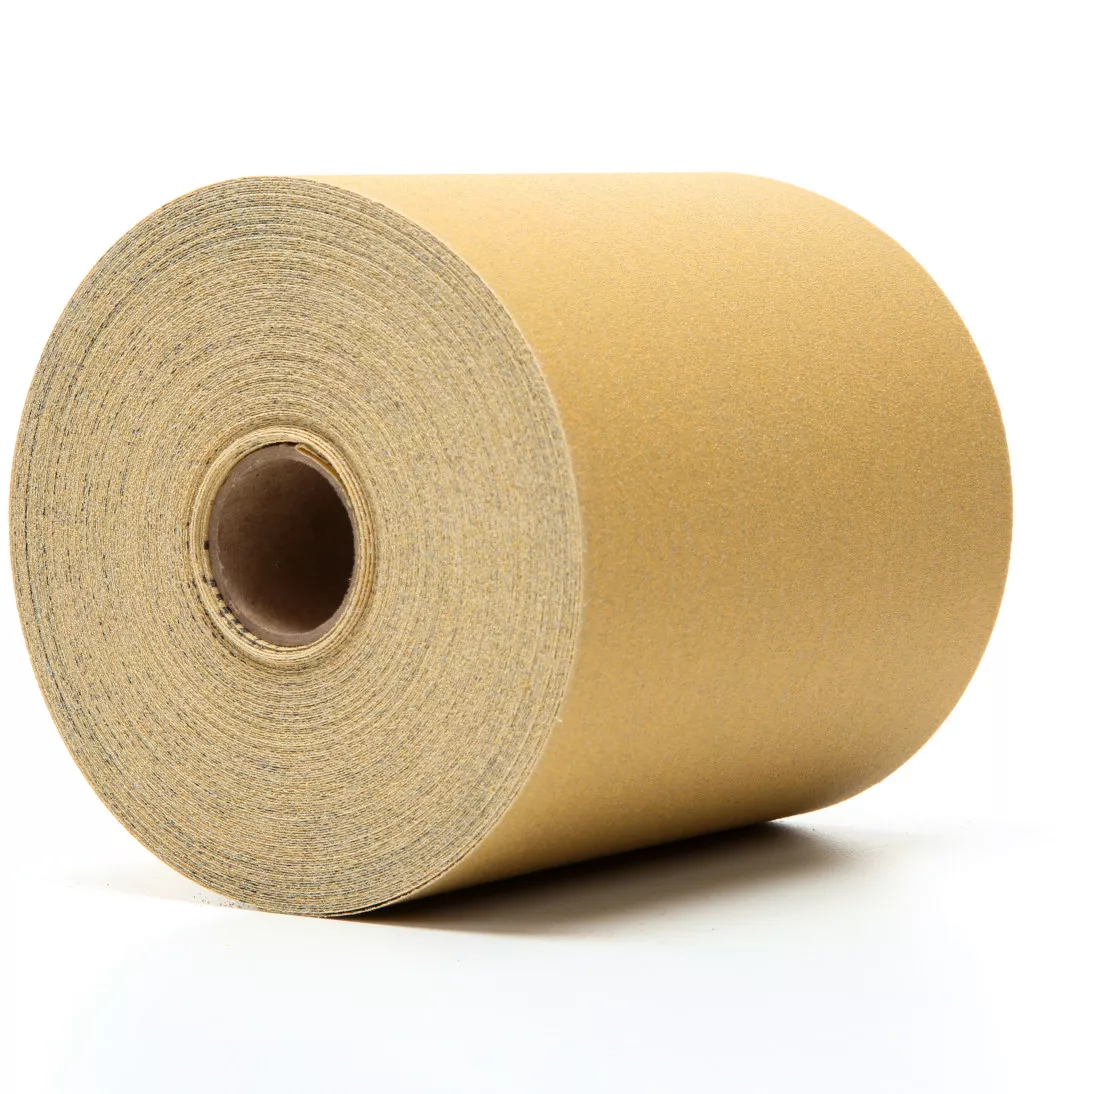 3M™ Stikit™ Gold Paper Sheet Roll, 02695, P150, 4 1/2 in x 25 yd, 6
rolls per case